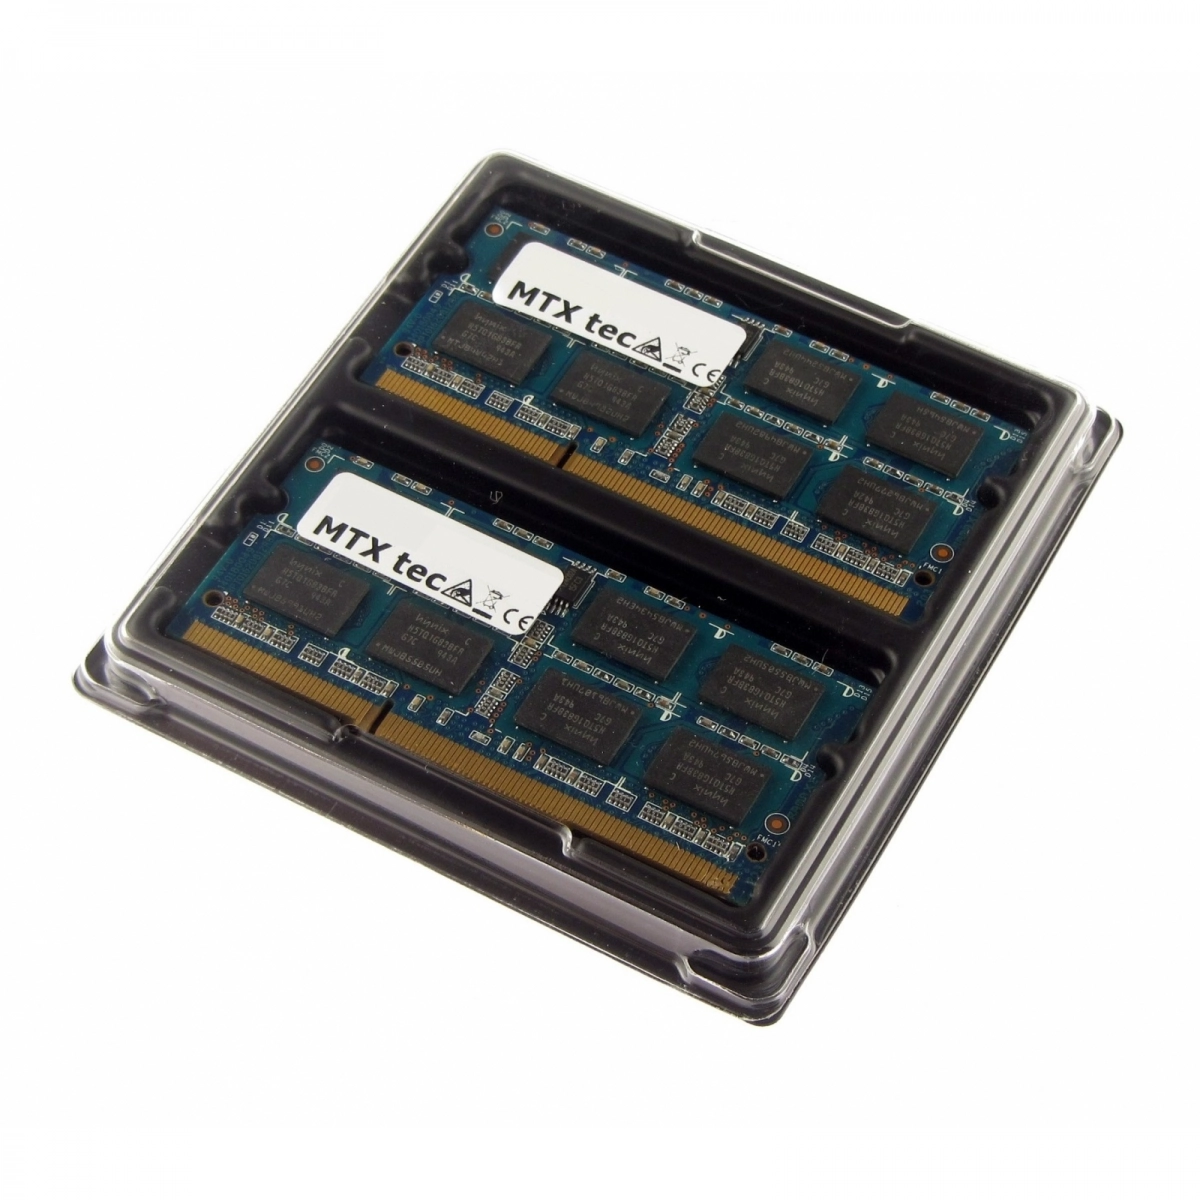 MTXtec 1GB Kit 2x 512MB DDR2 533MHz SODIMM DDR2 PC2-4200, 200 Pin RAM Laptop-Speicher